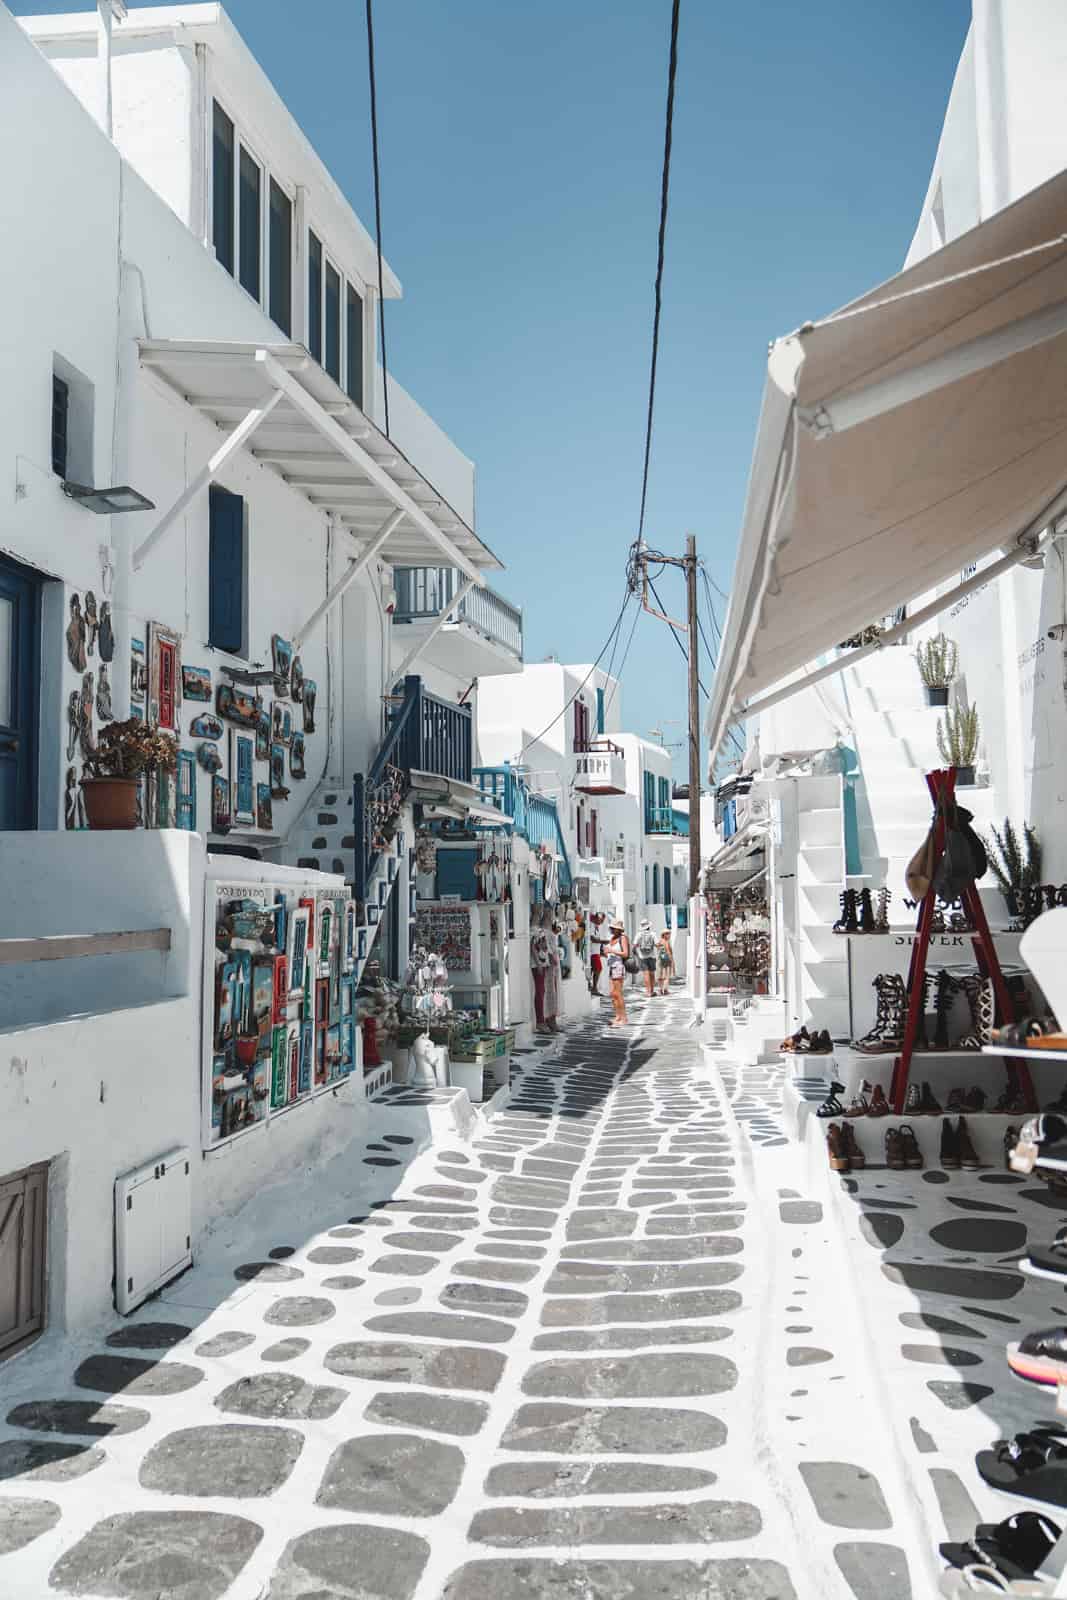 The beautiful white market streets of Mykonos, Greece.